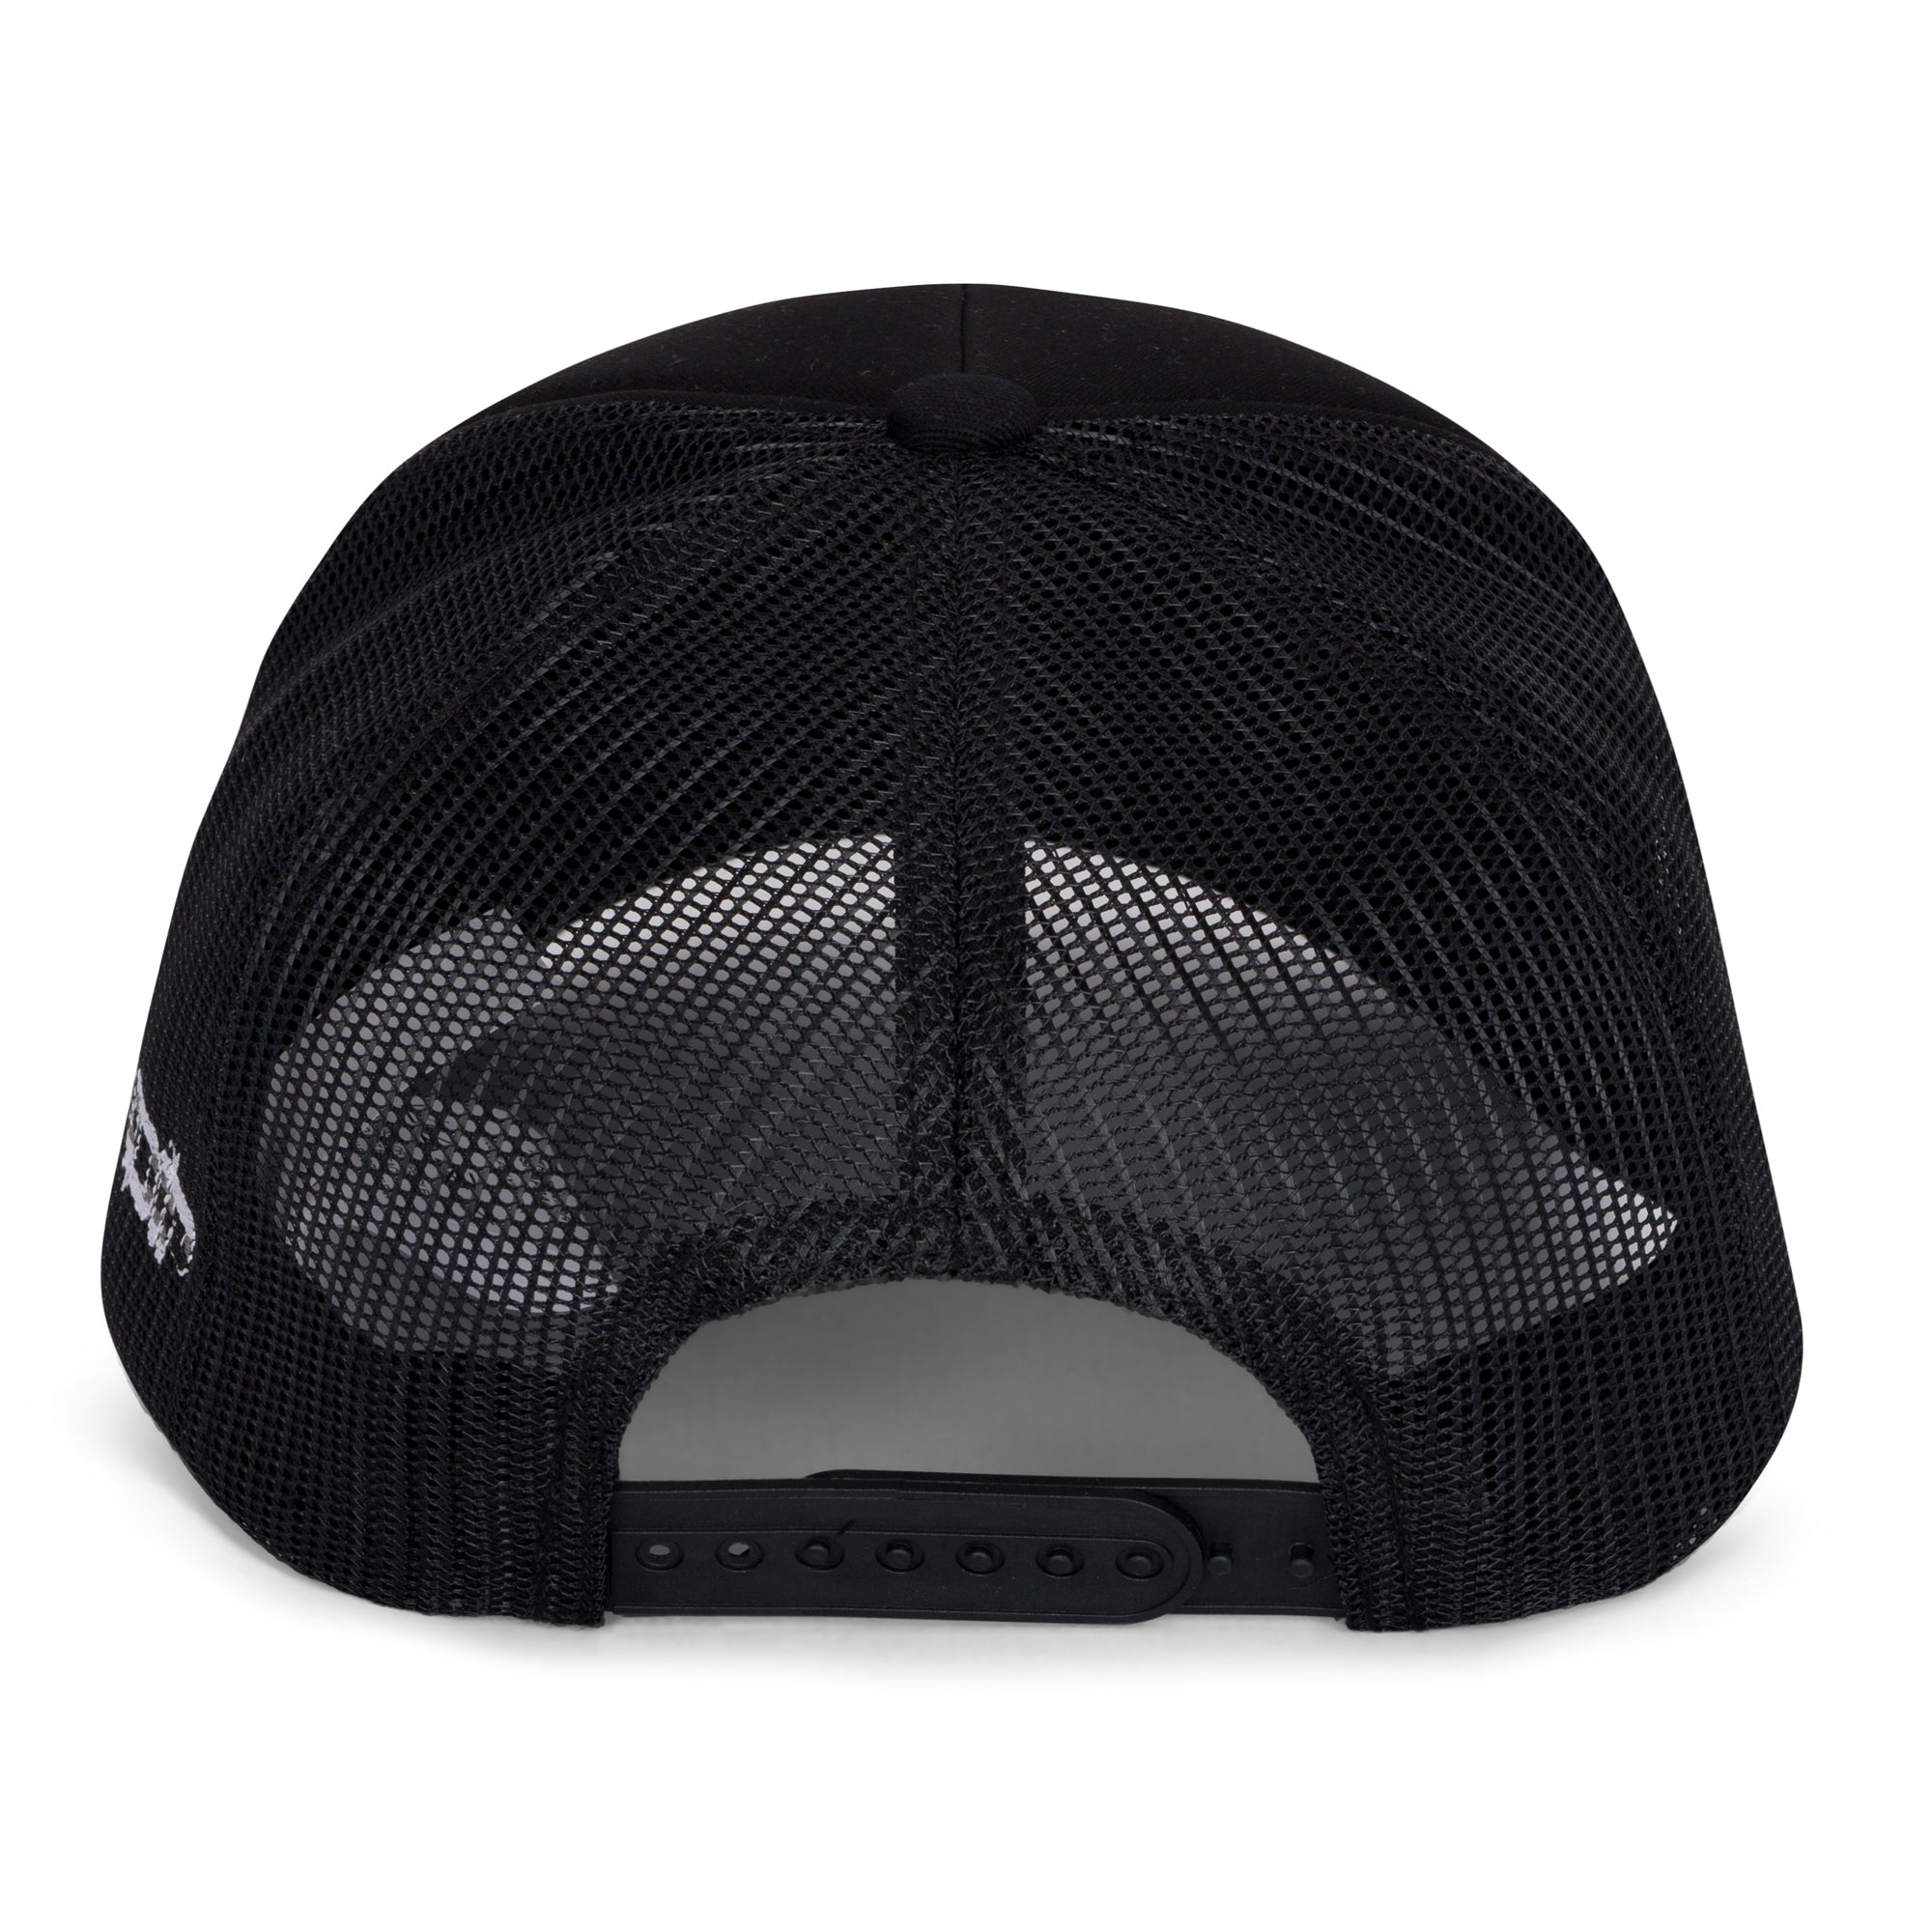 RipNDip Nerminator 2.0 Trucker Hat (Black)